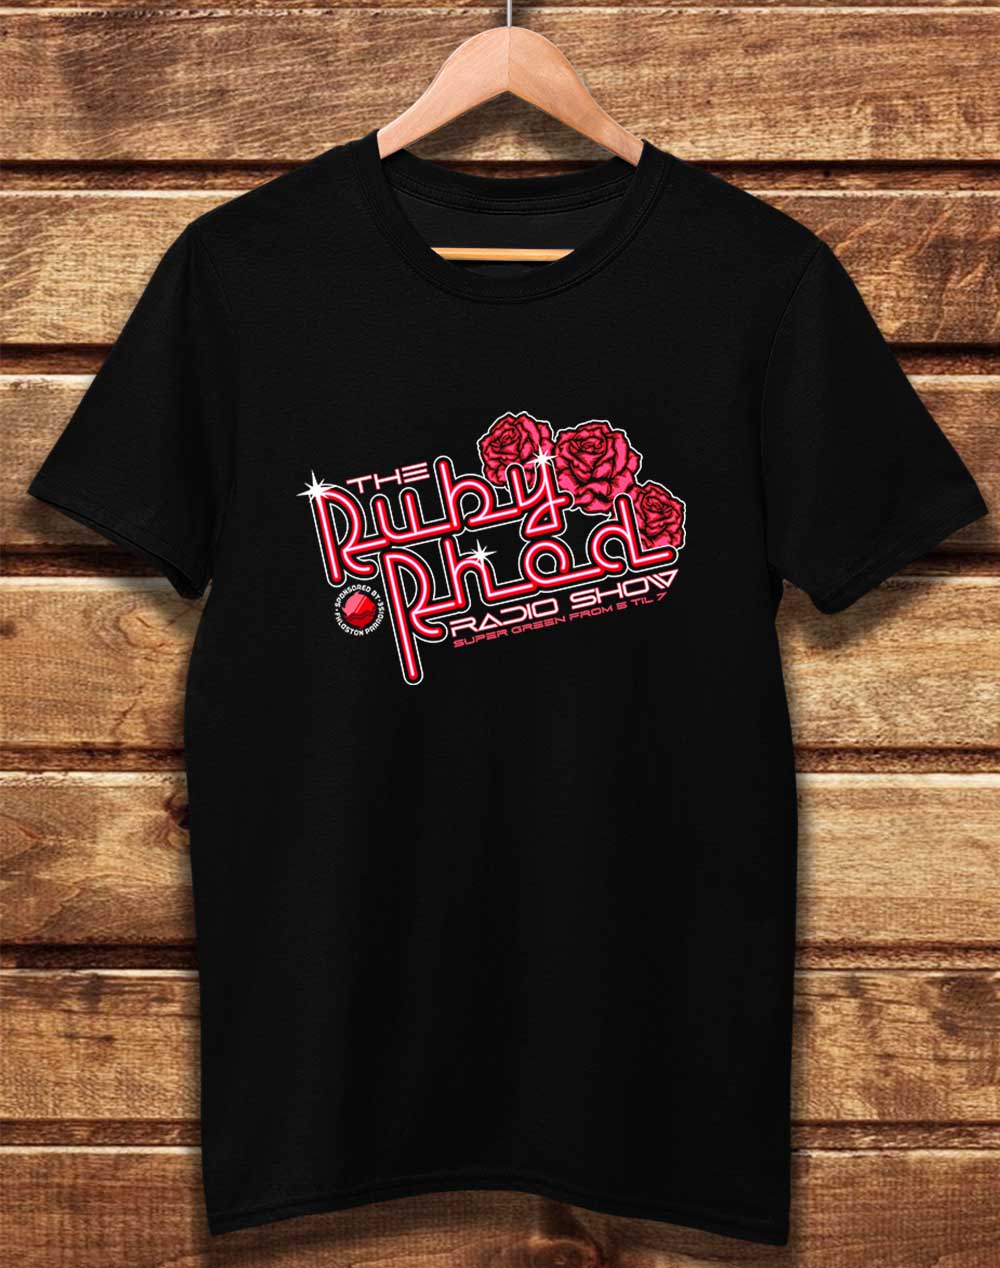 Black - DELUXE Ruby Rhod Radio Show Organic Cotton T-Shirt